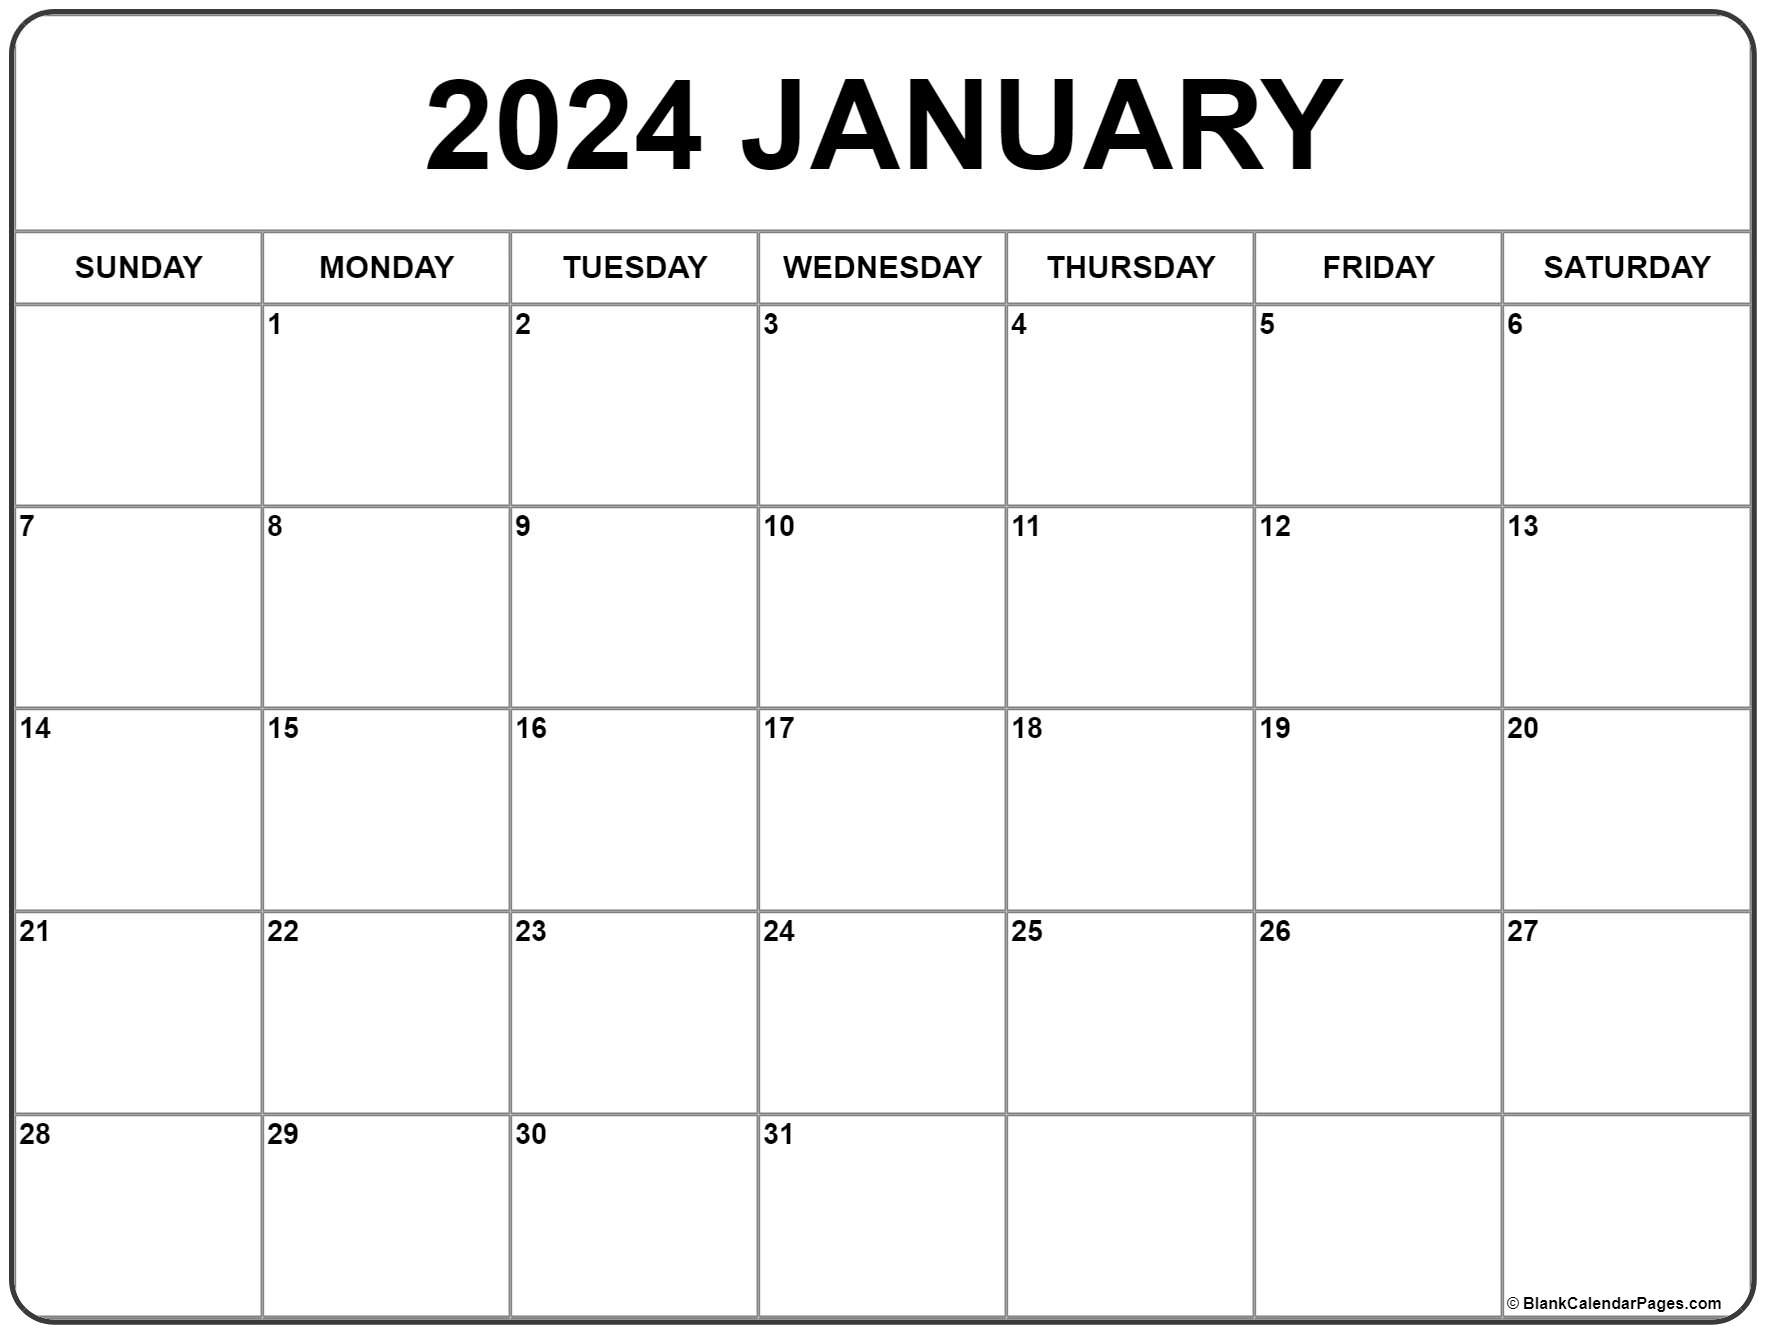 January 2024 Calendar | Free Printable Calendar for Jan 2024 Calendar Printable Free